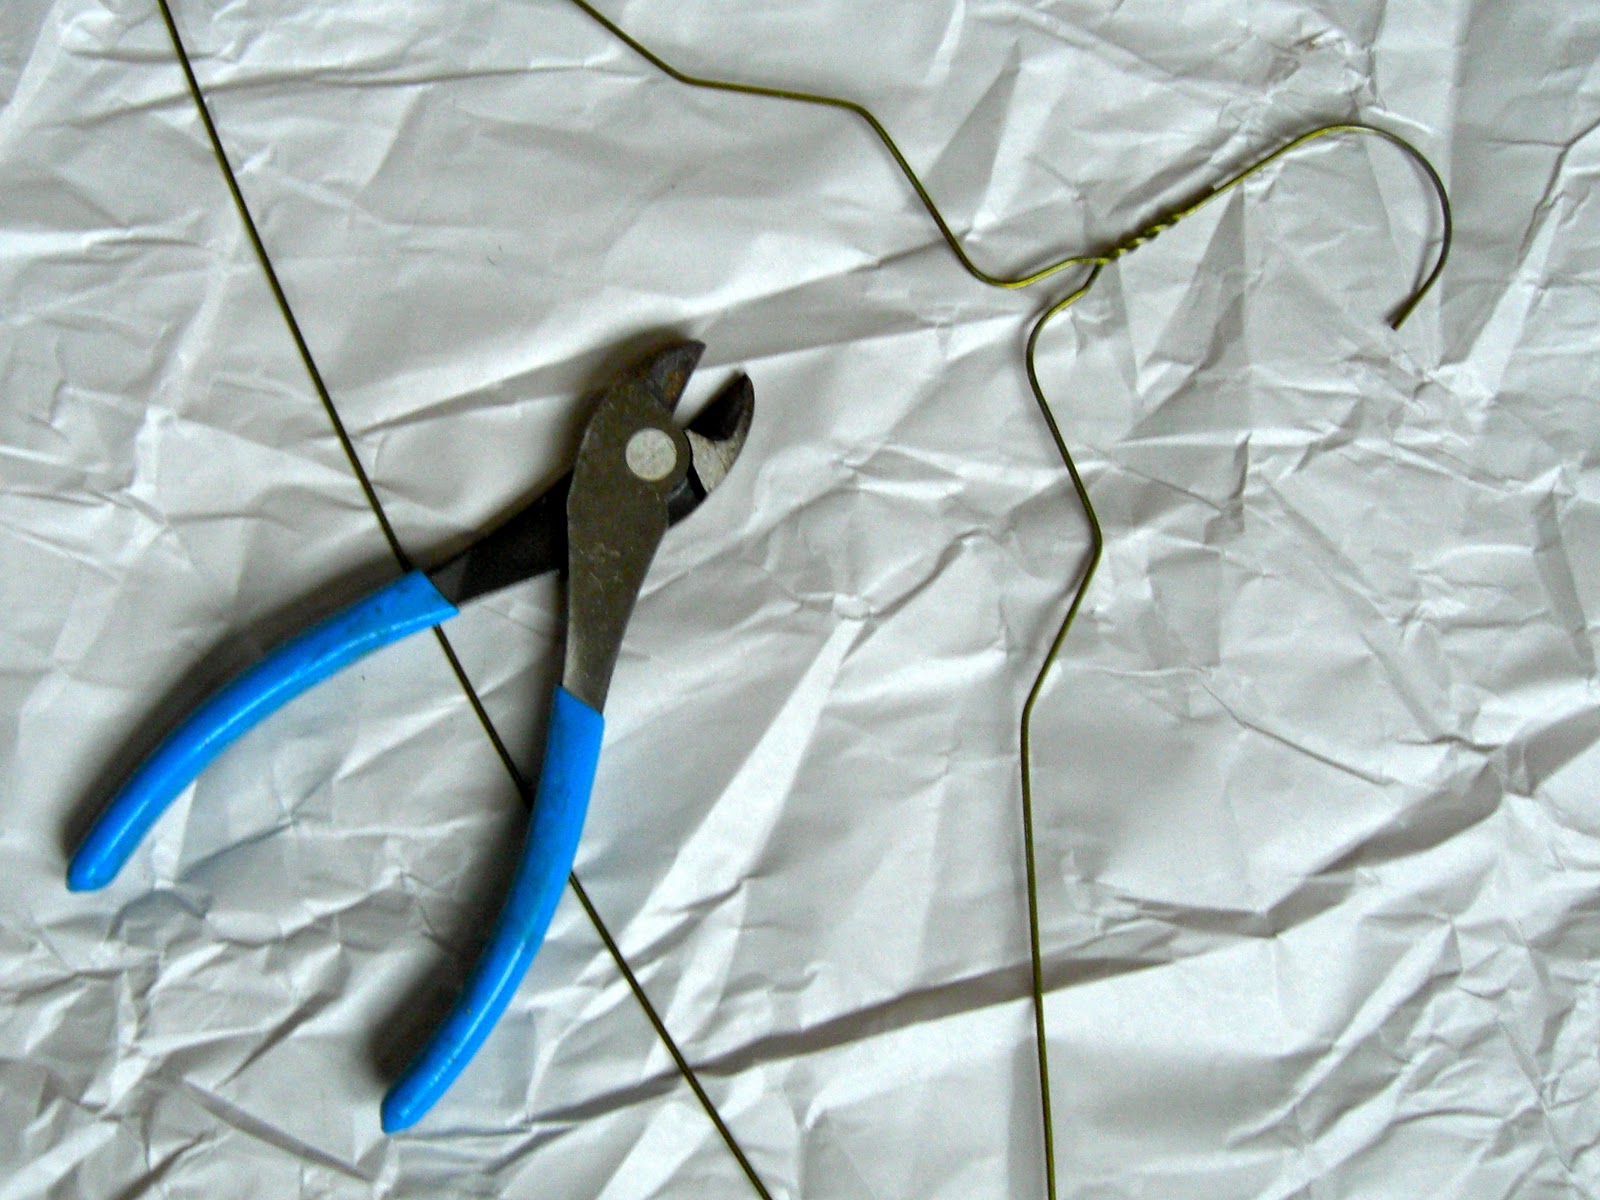 https://nwedible.com/wp-content/uploads/2011/02/Turn-Your-Old-Wire-Hangers-Into-Garden-Staples75.jpg